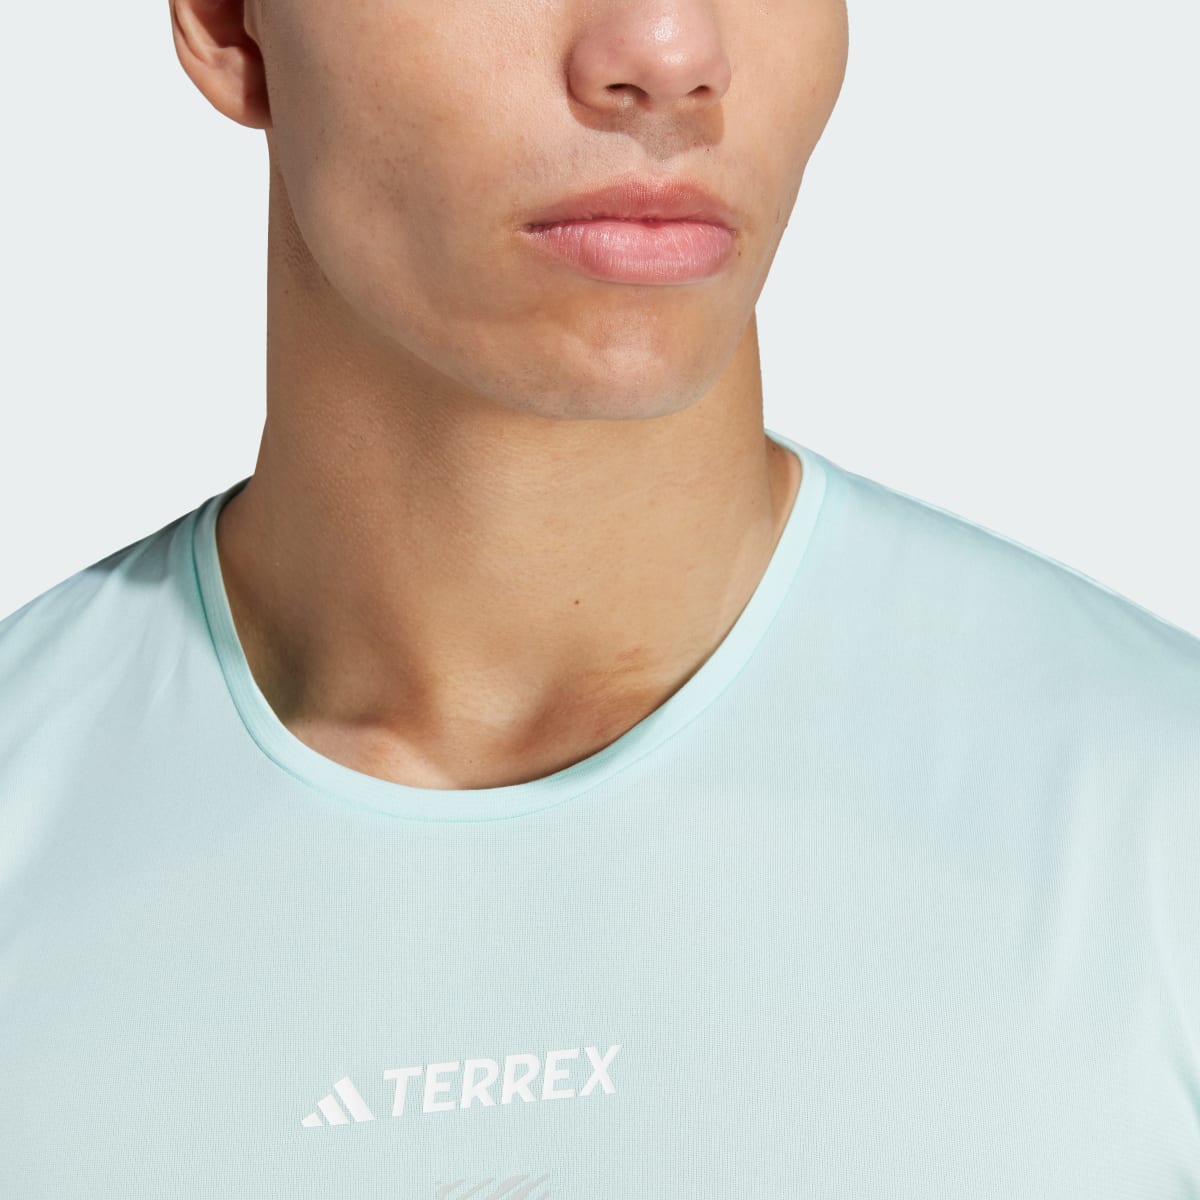 Adidas Terrex Agravic Trail Running T-Shirt. 6